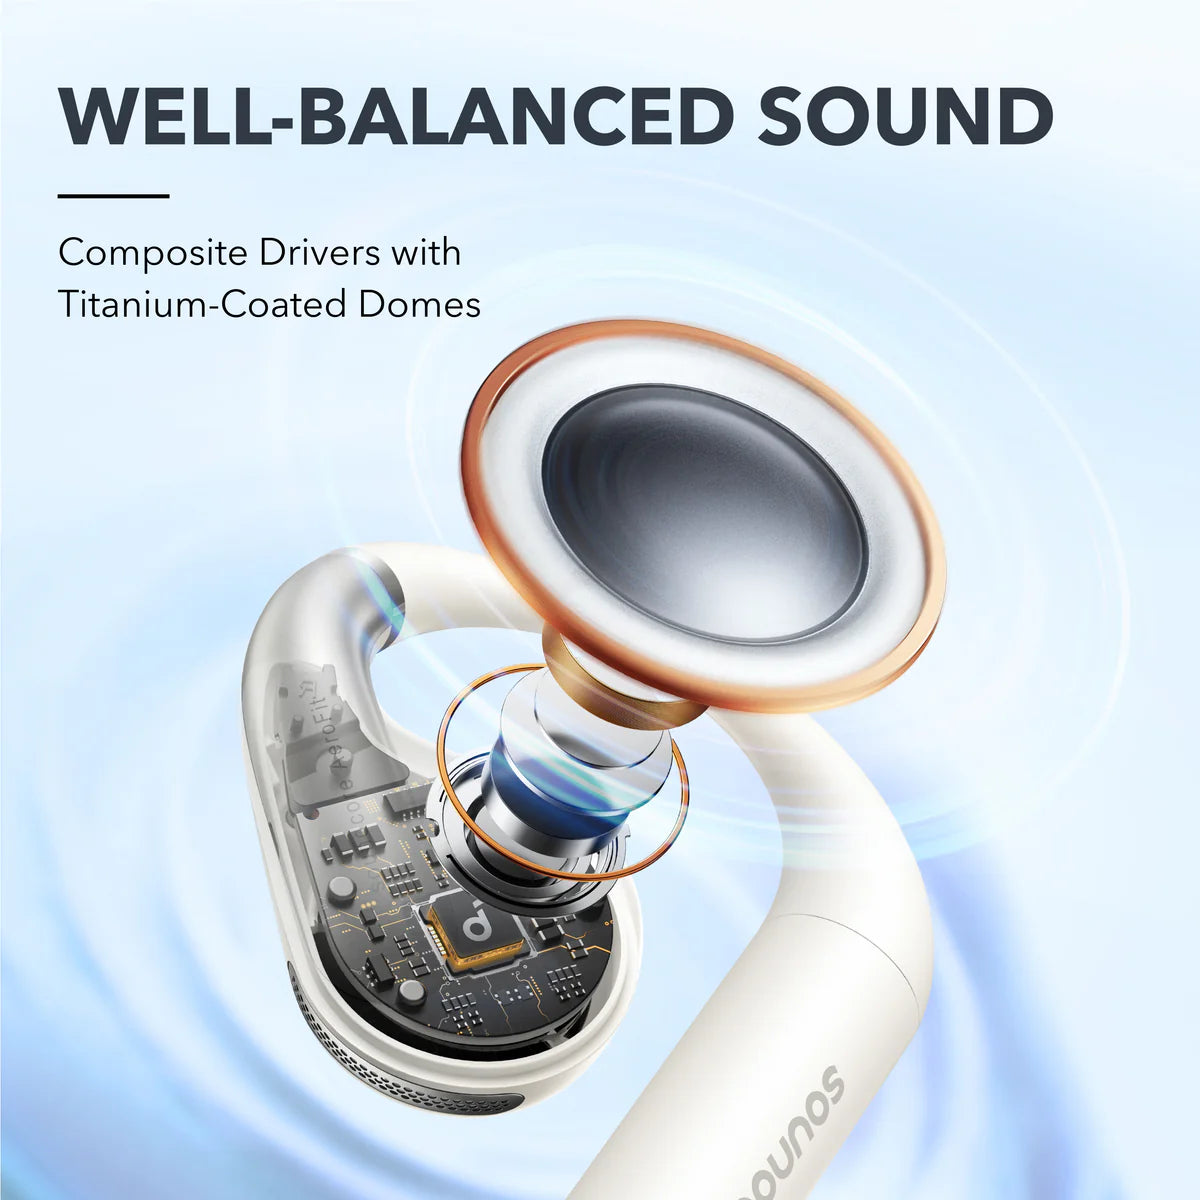 soundcore AeroFit Open-Ear Headphones - soundcore US